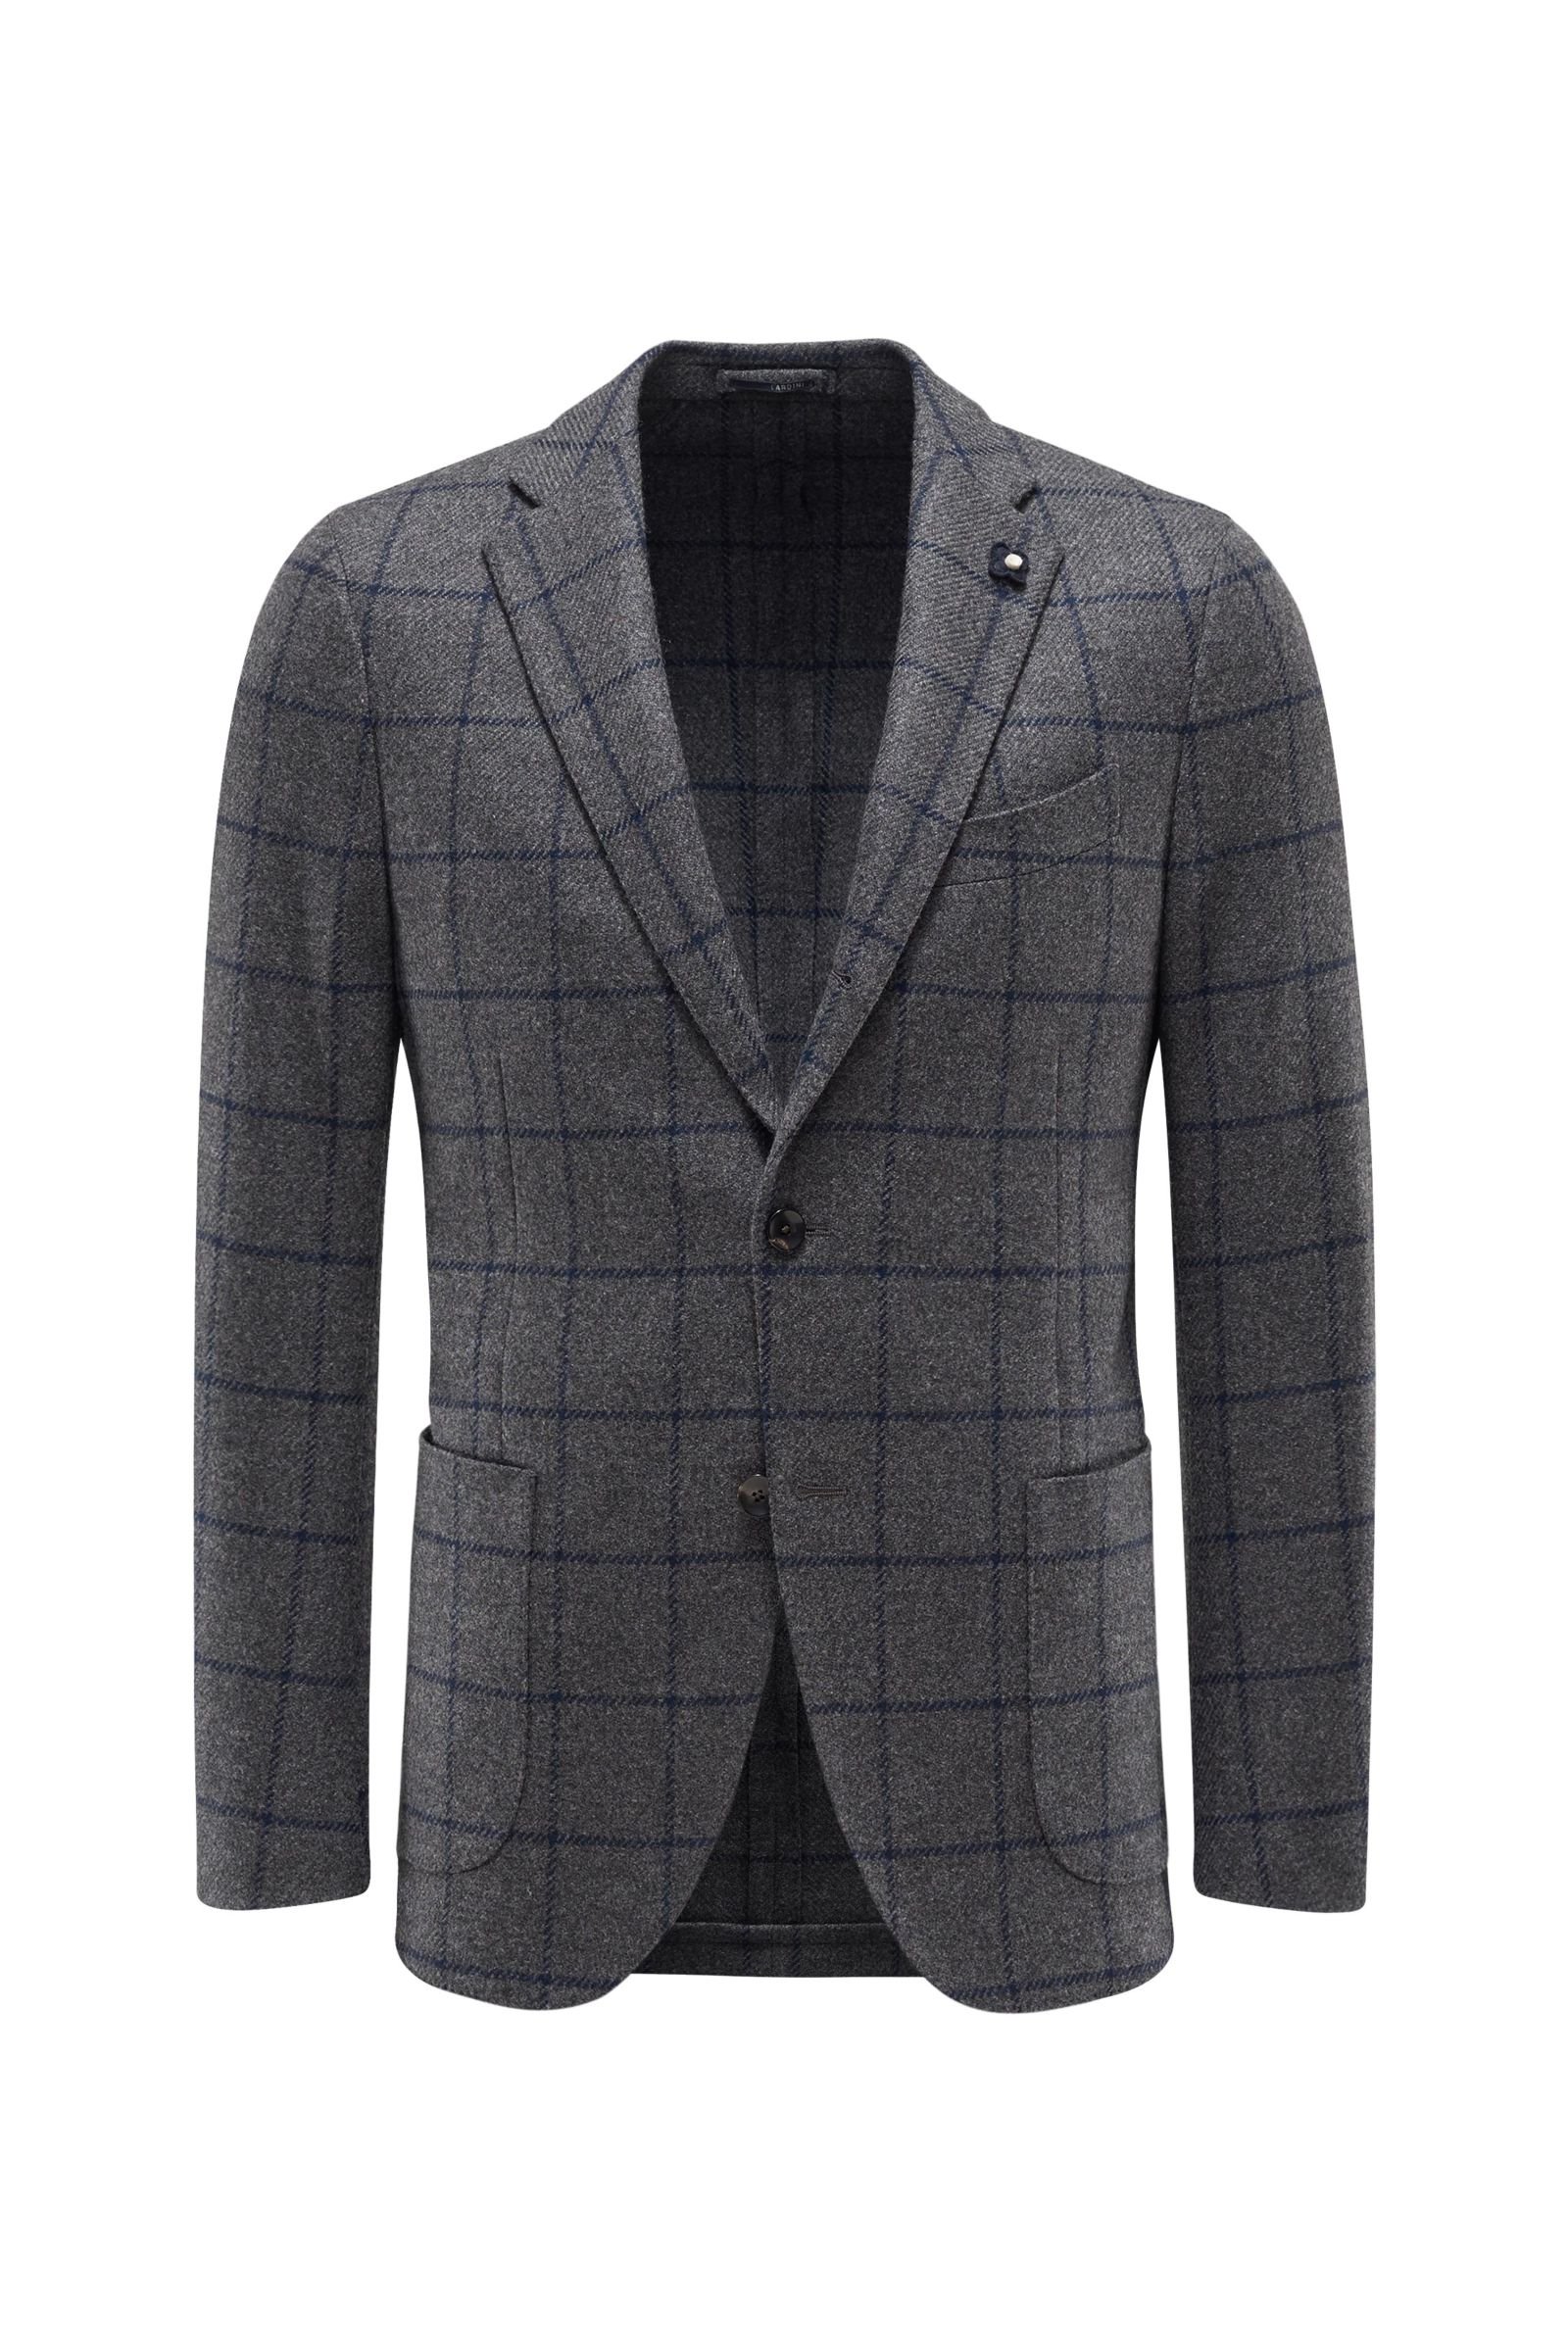 Smart-casual jacket grey checked